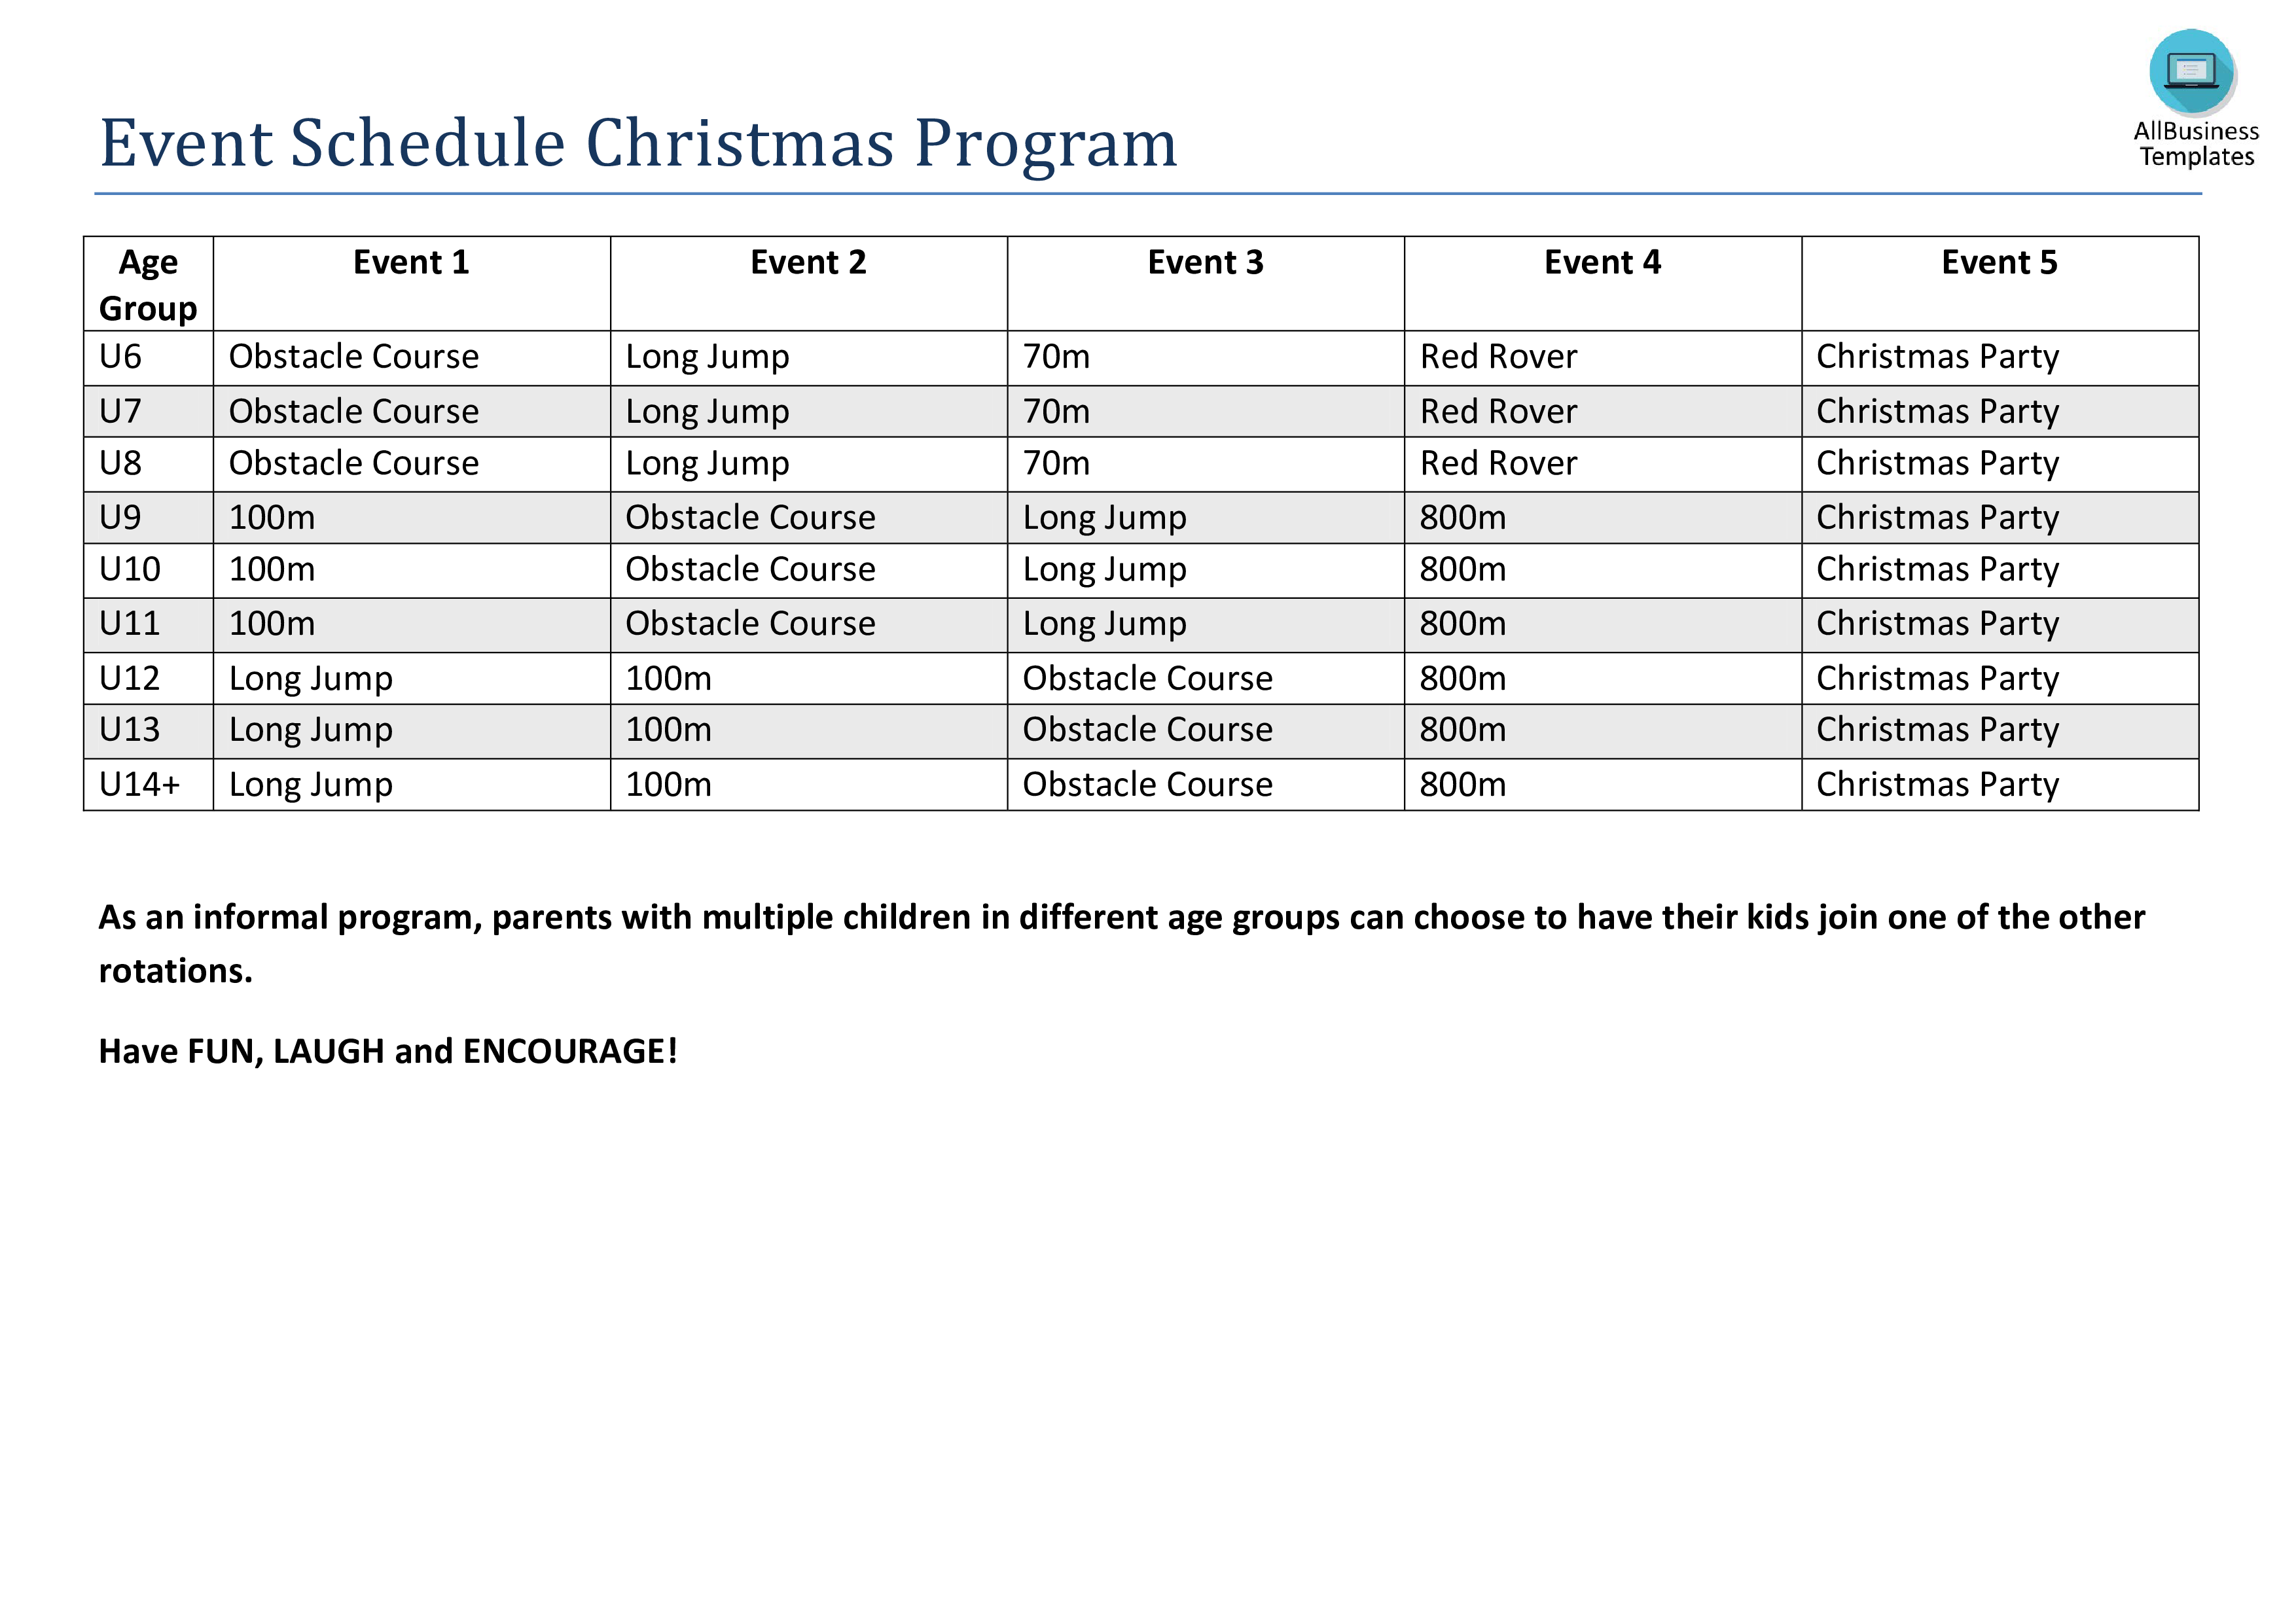 Event Schedule Christmas Program main image